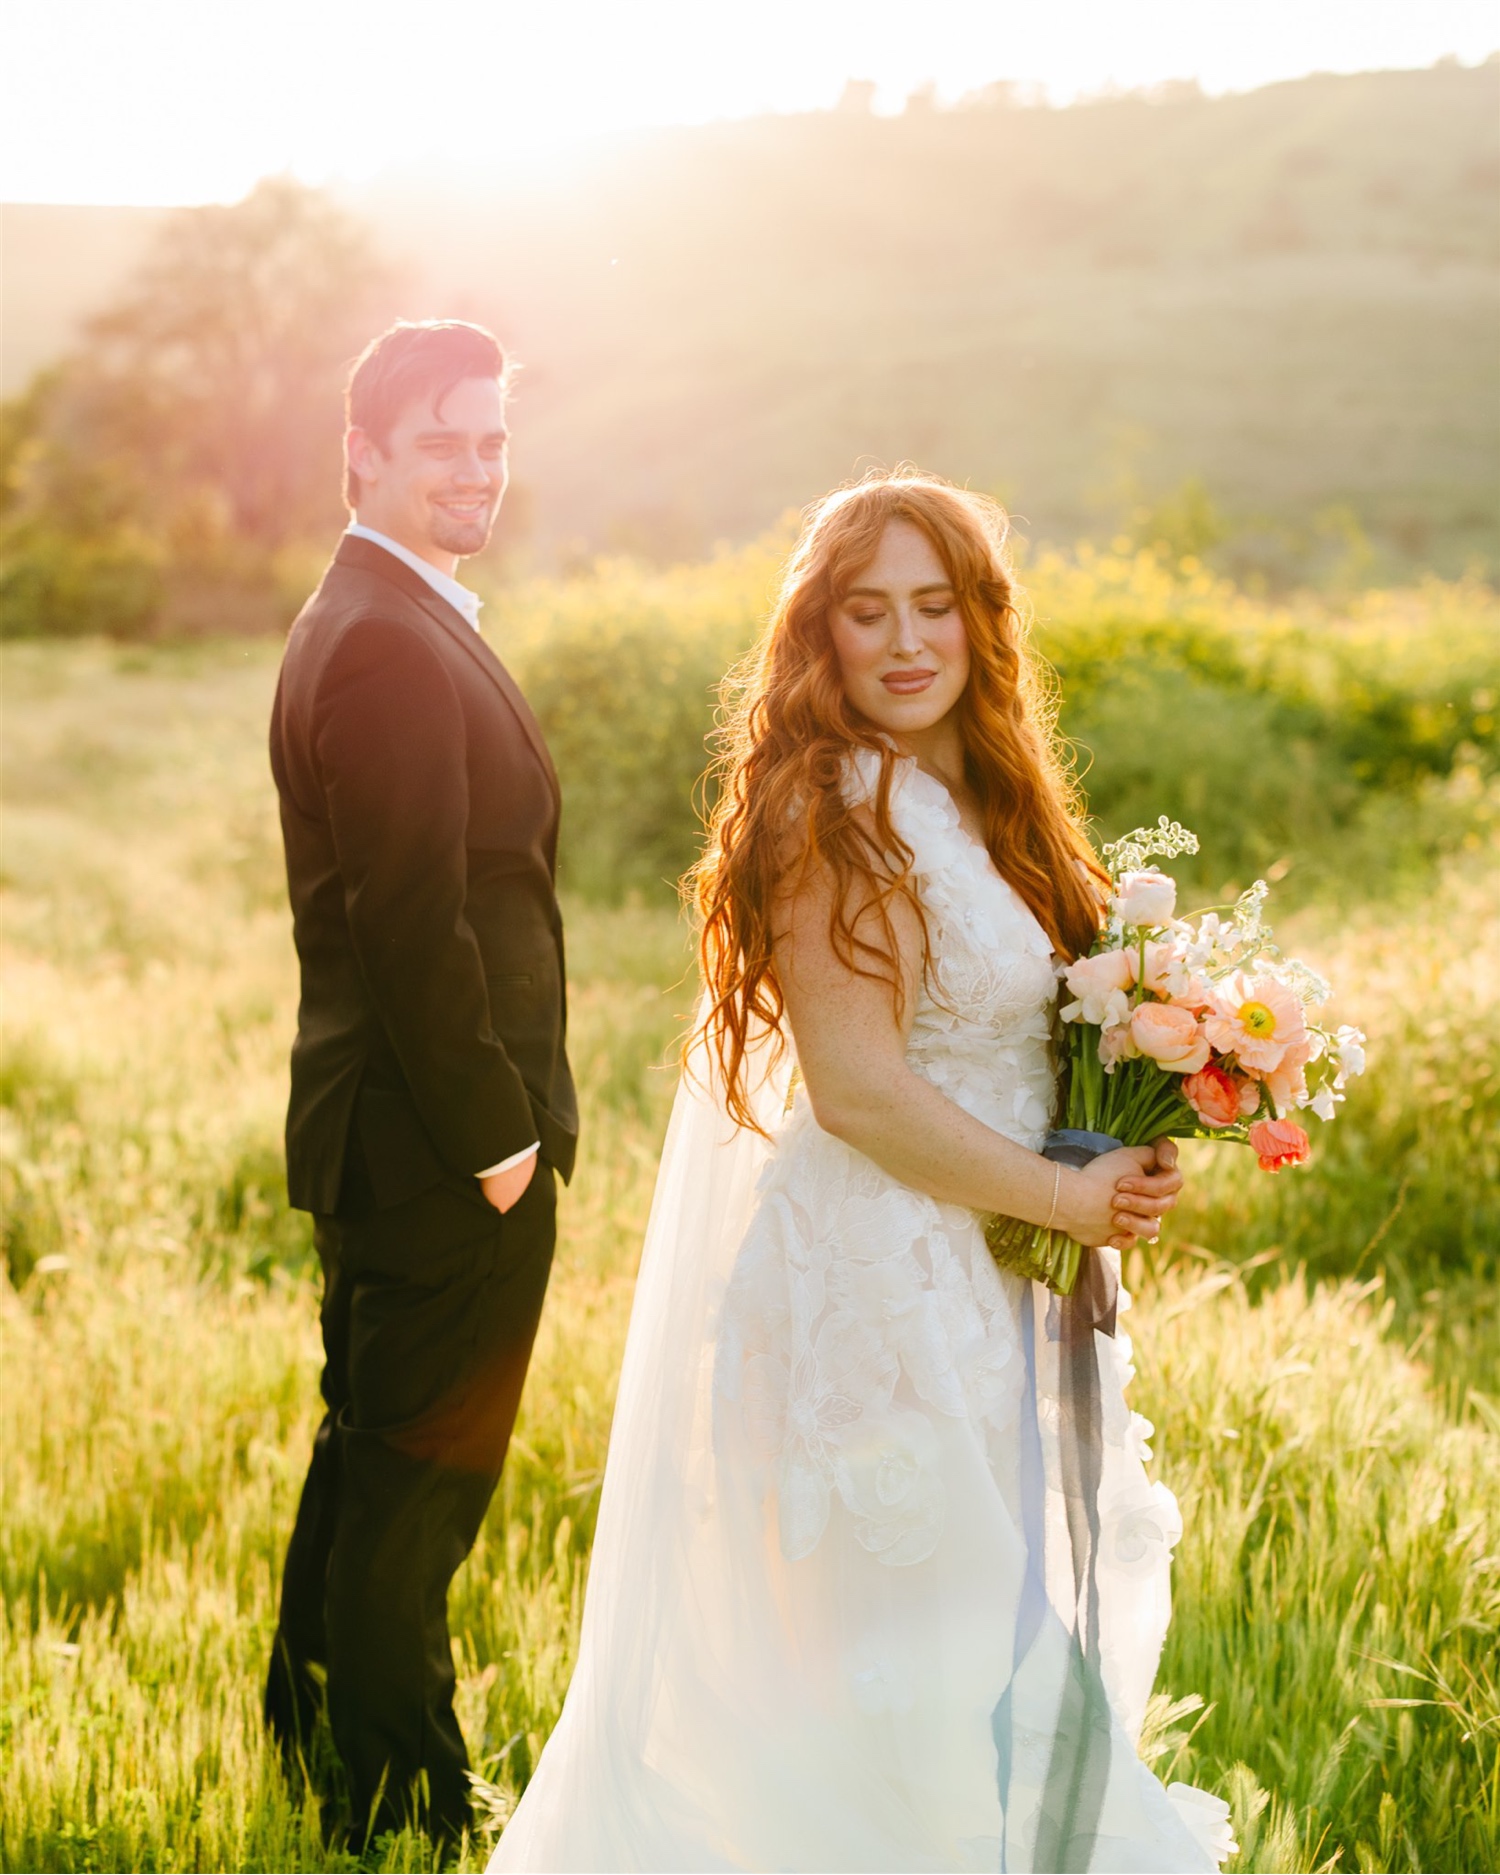 Hanna Walkowaik wedding photography; Orange County photographer